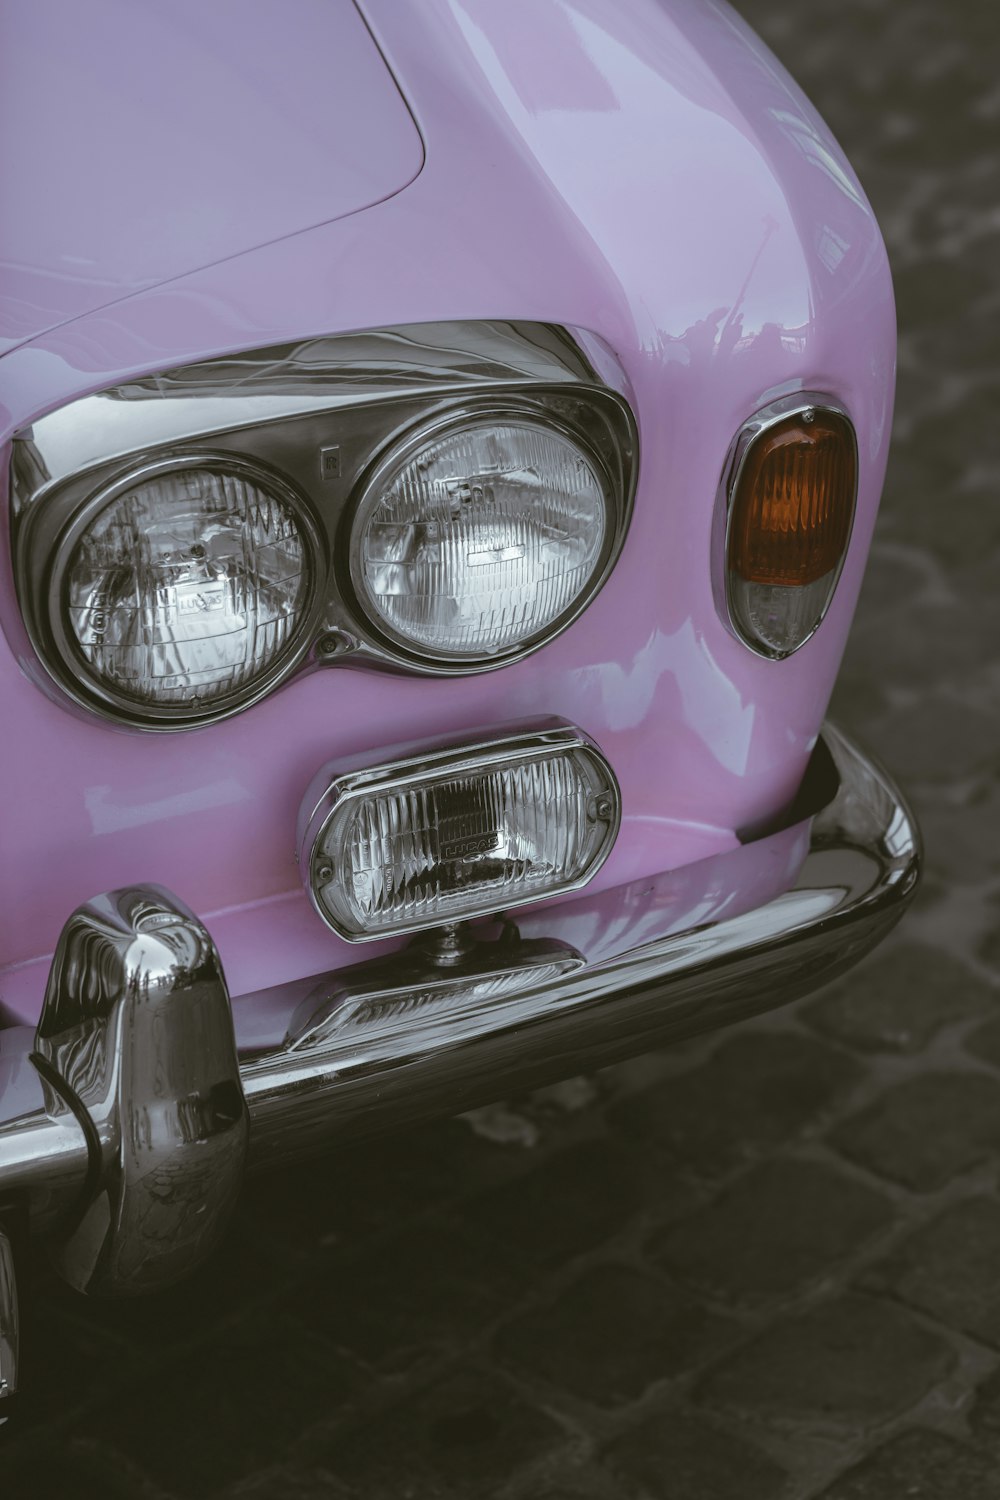 a close up of a pink car headlight